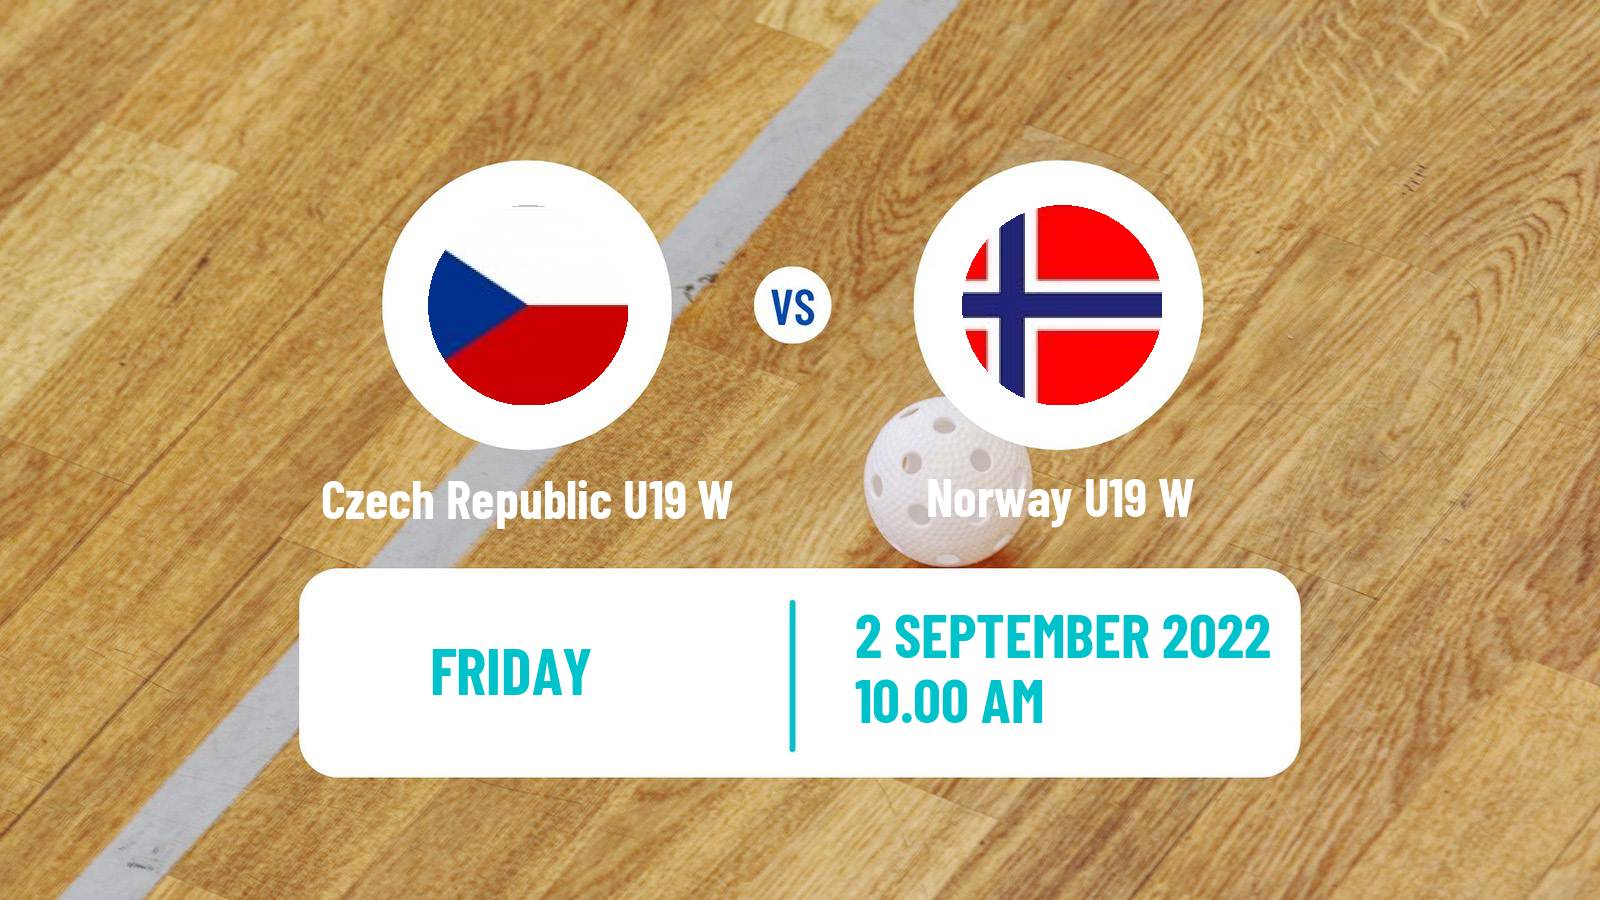 Floorball World Championship Floorball U19 Women Czech Republic U19 W - Norway U19 W